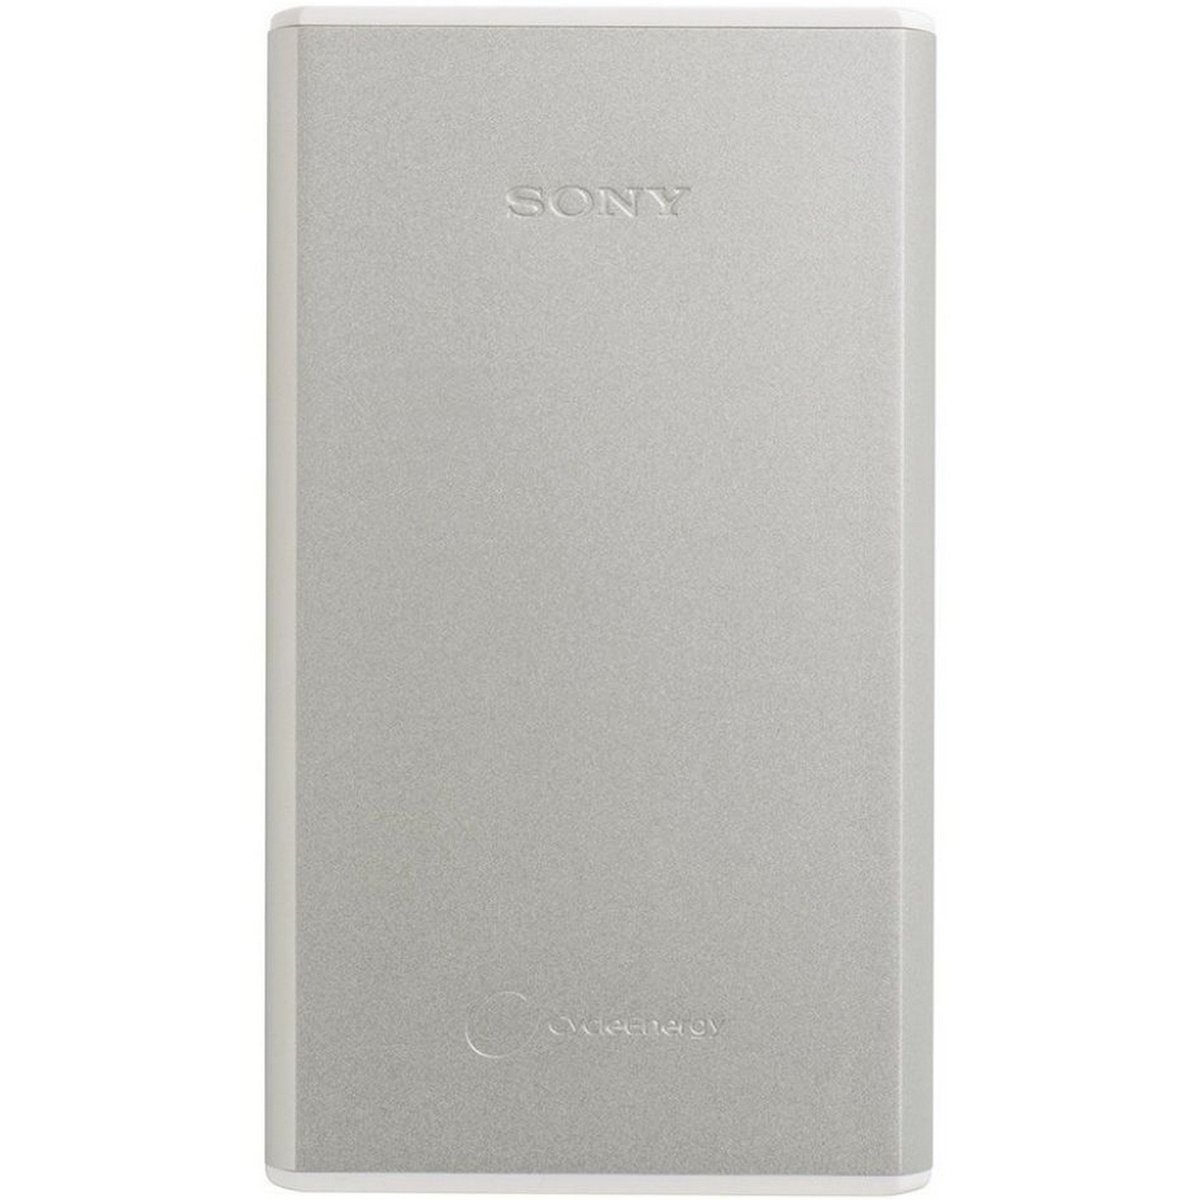 Sony Power Bank CP-S15 White 15000mAh